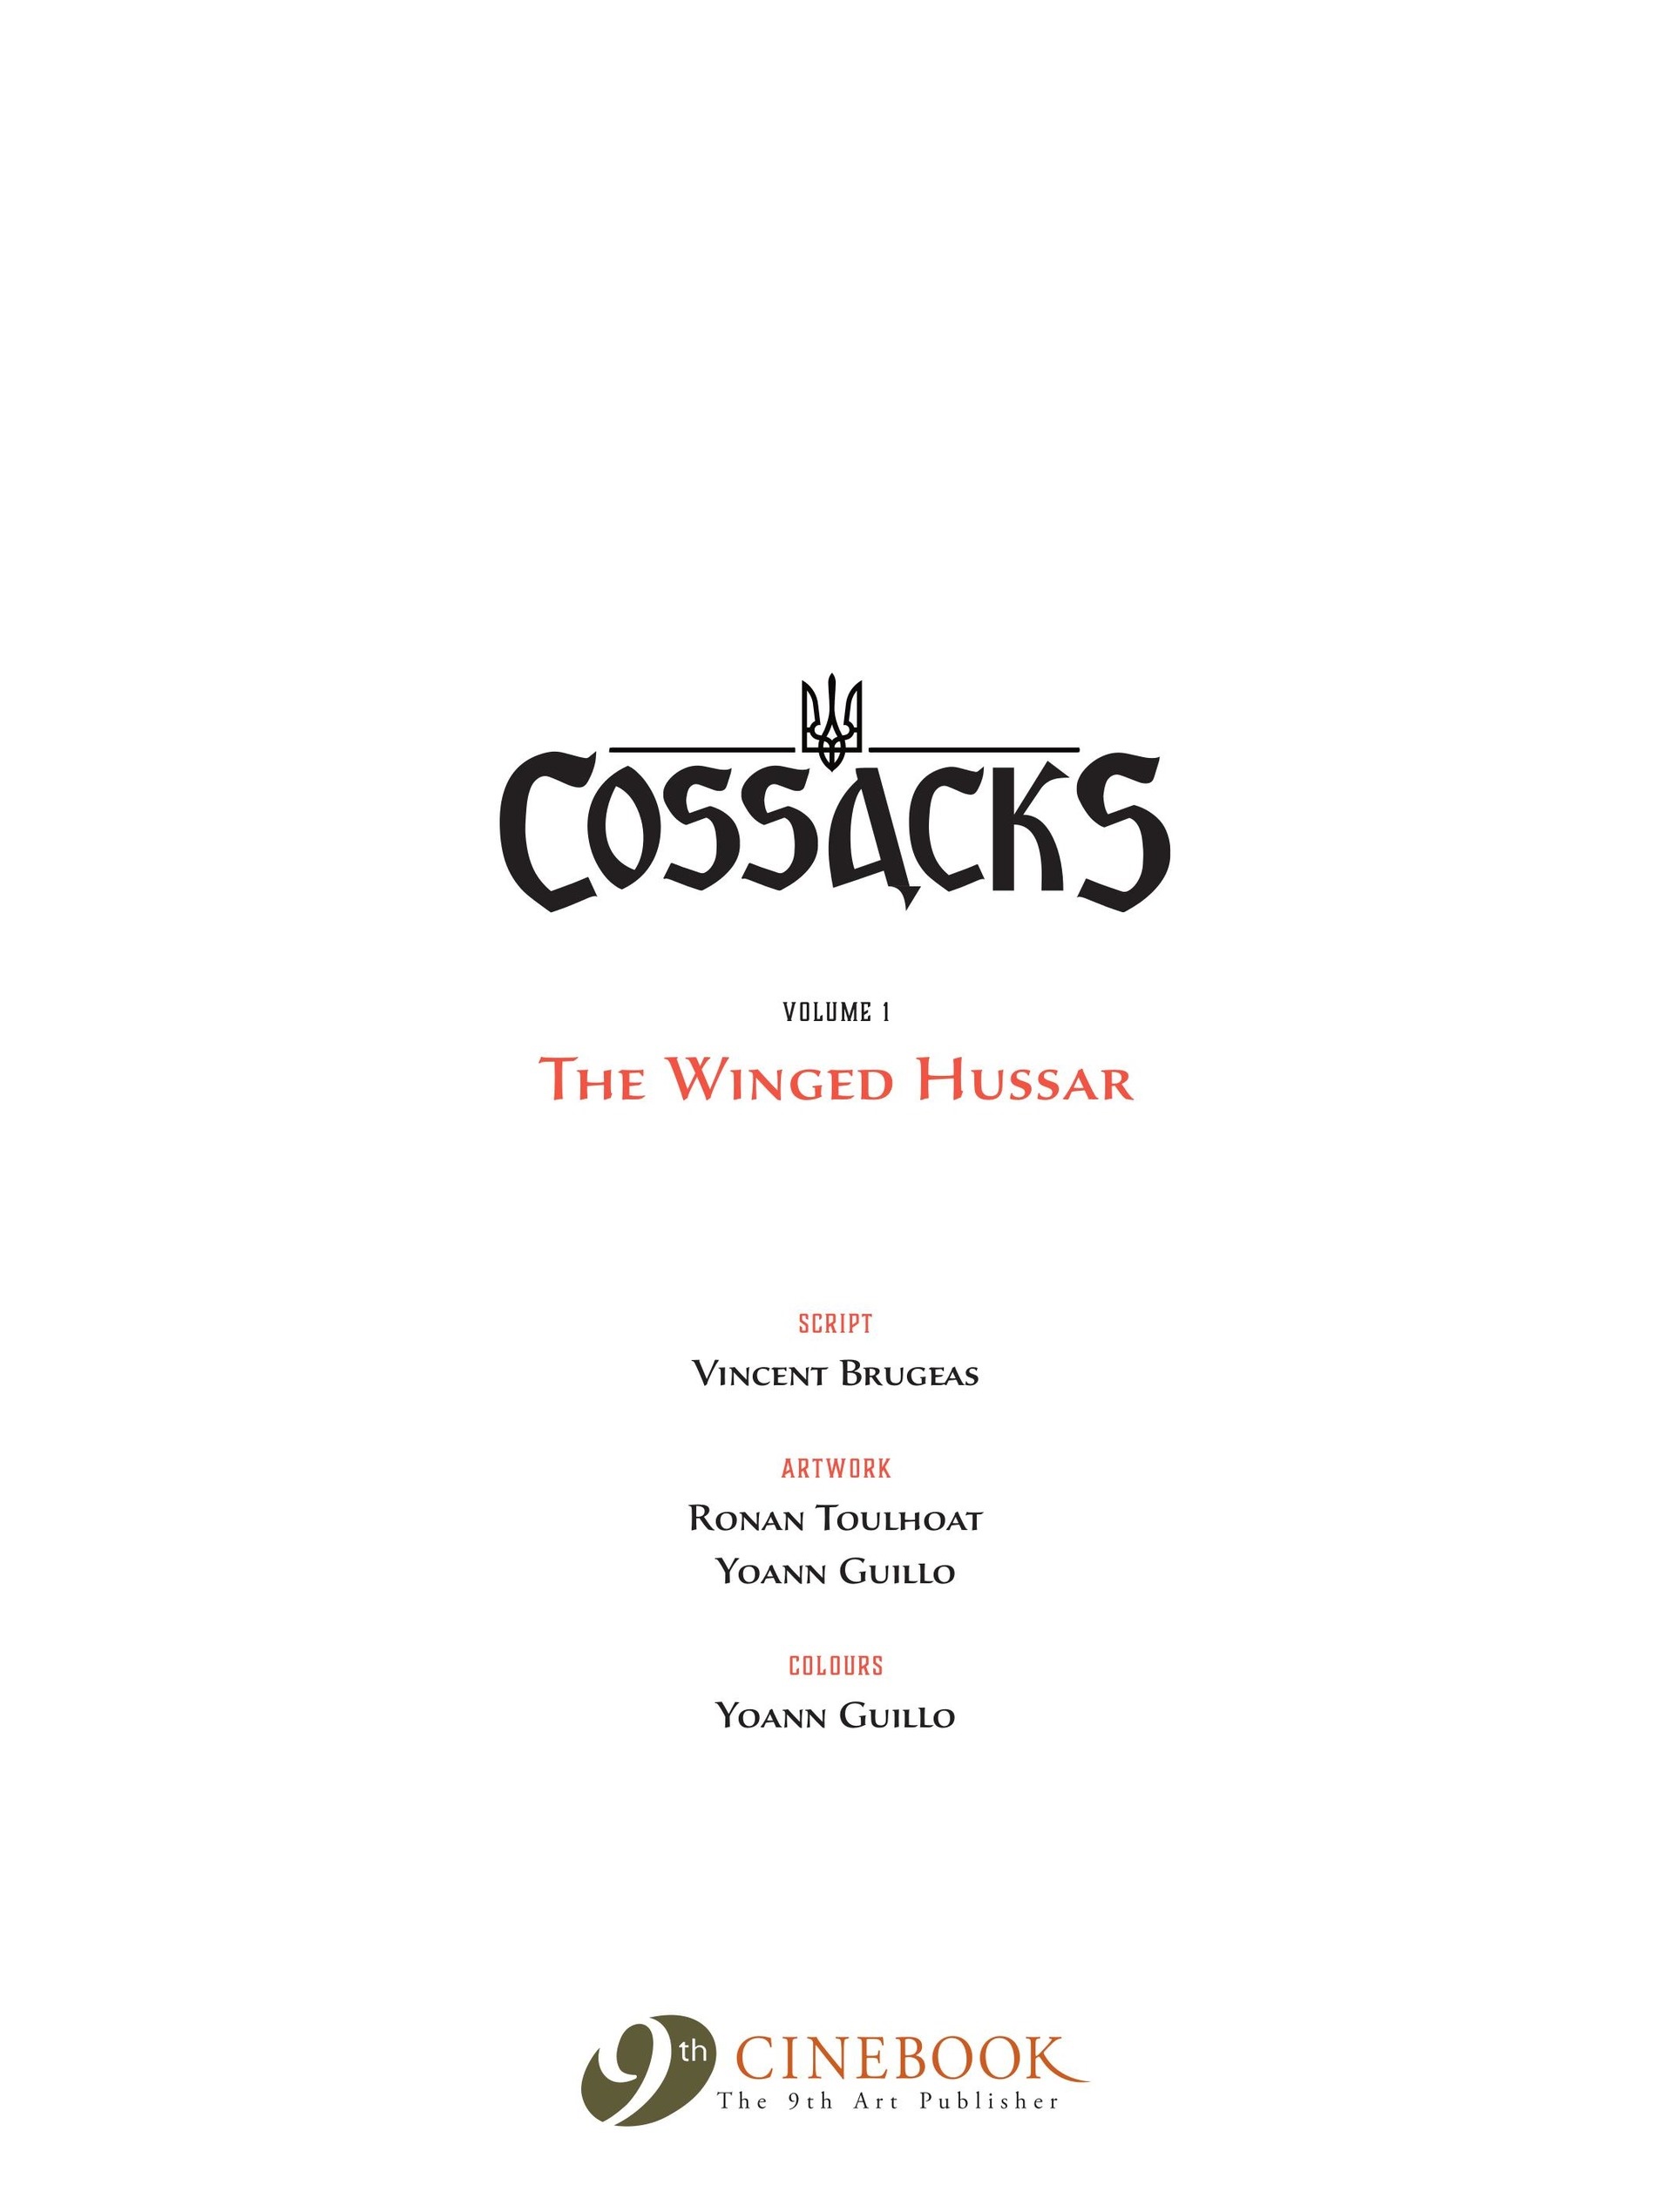 Read online Cossacks comic -  Issue #1 - 3